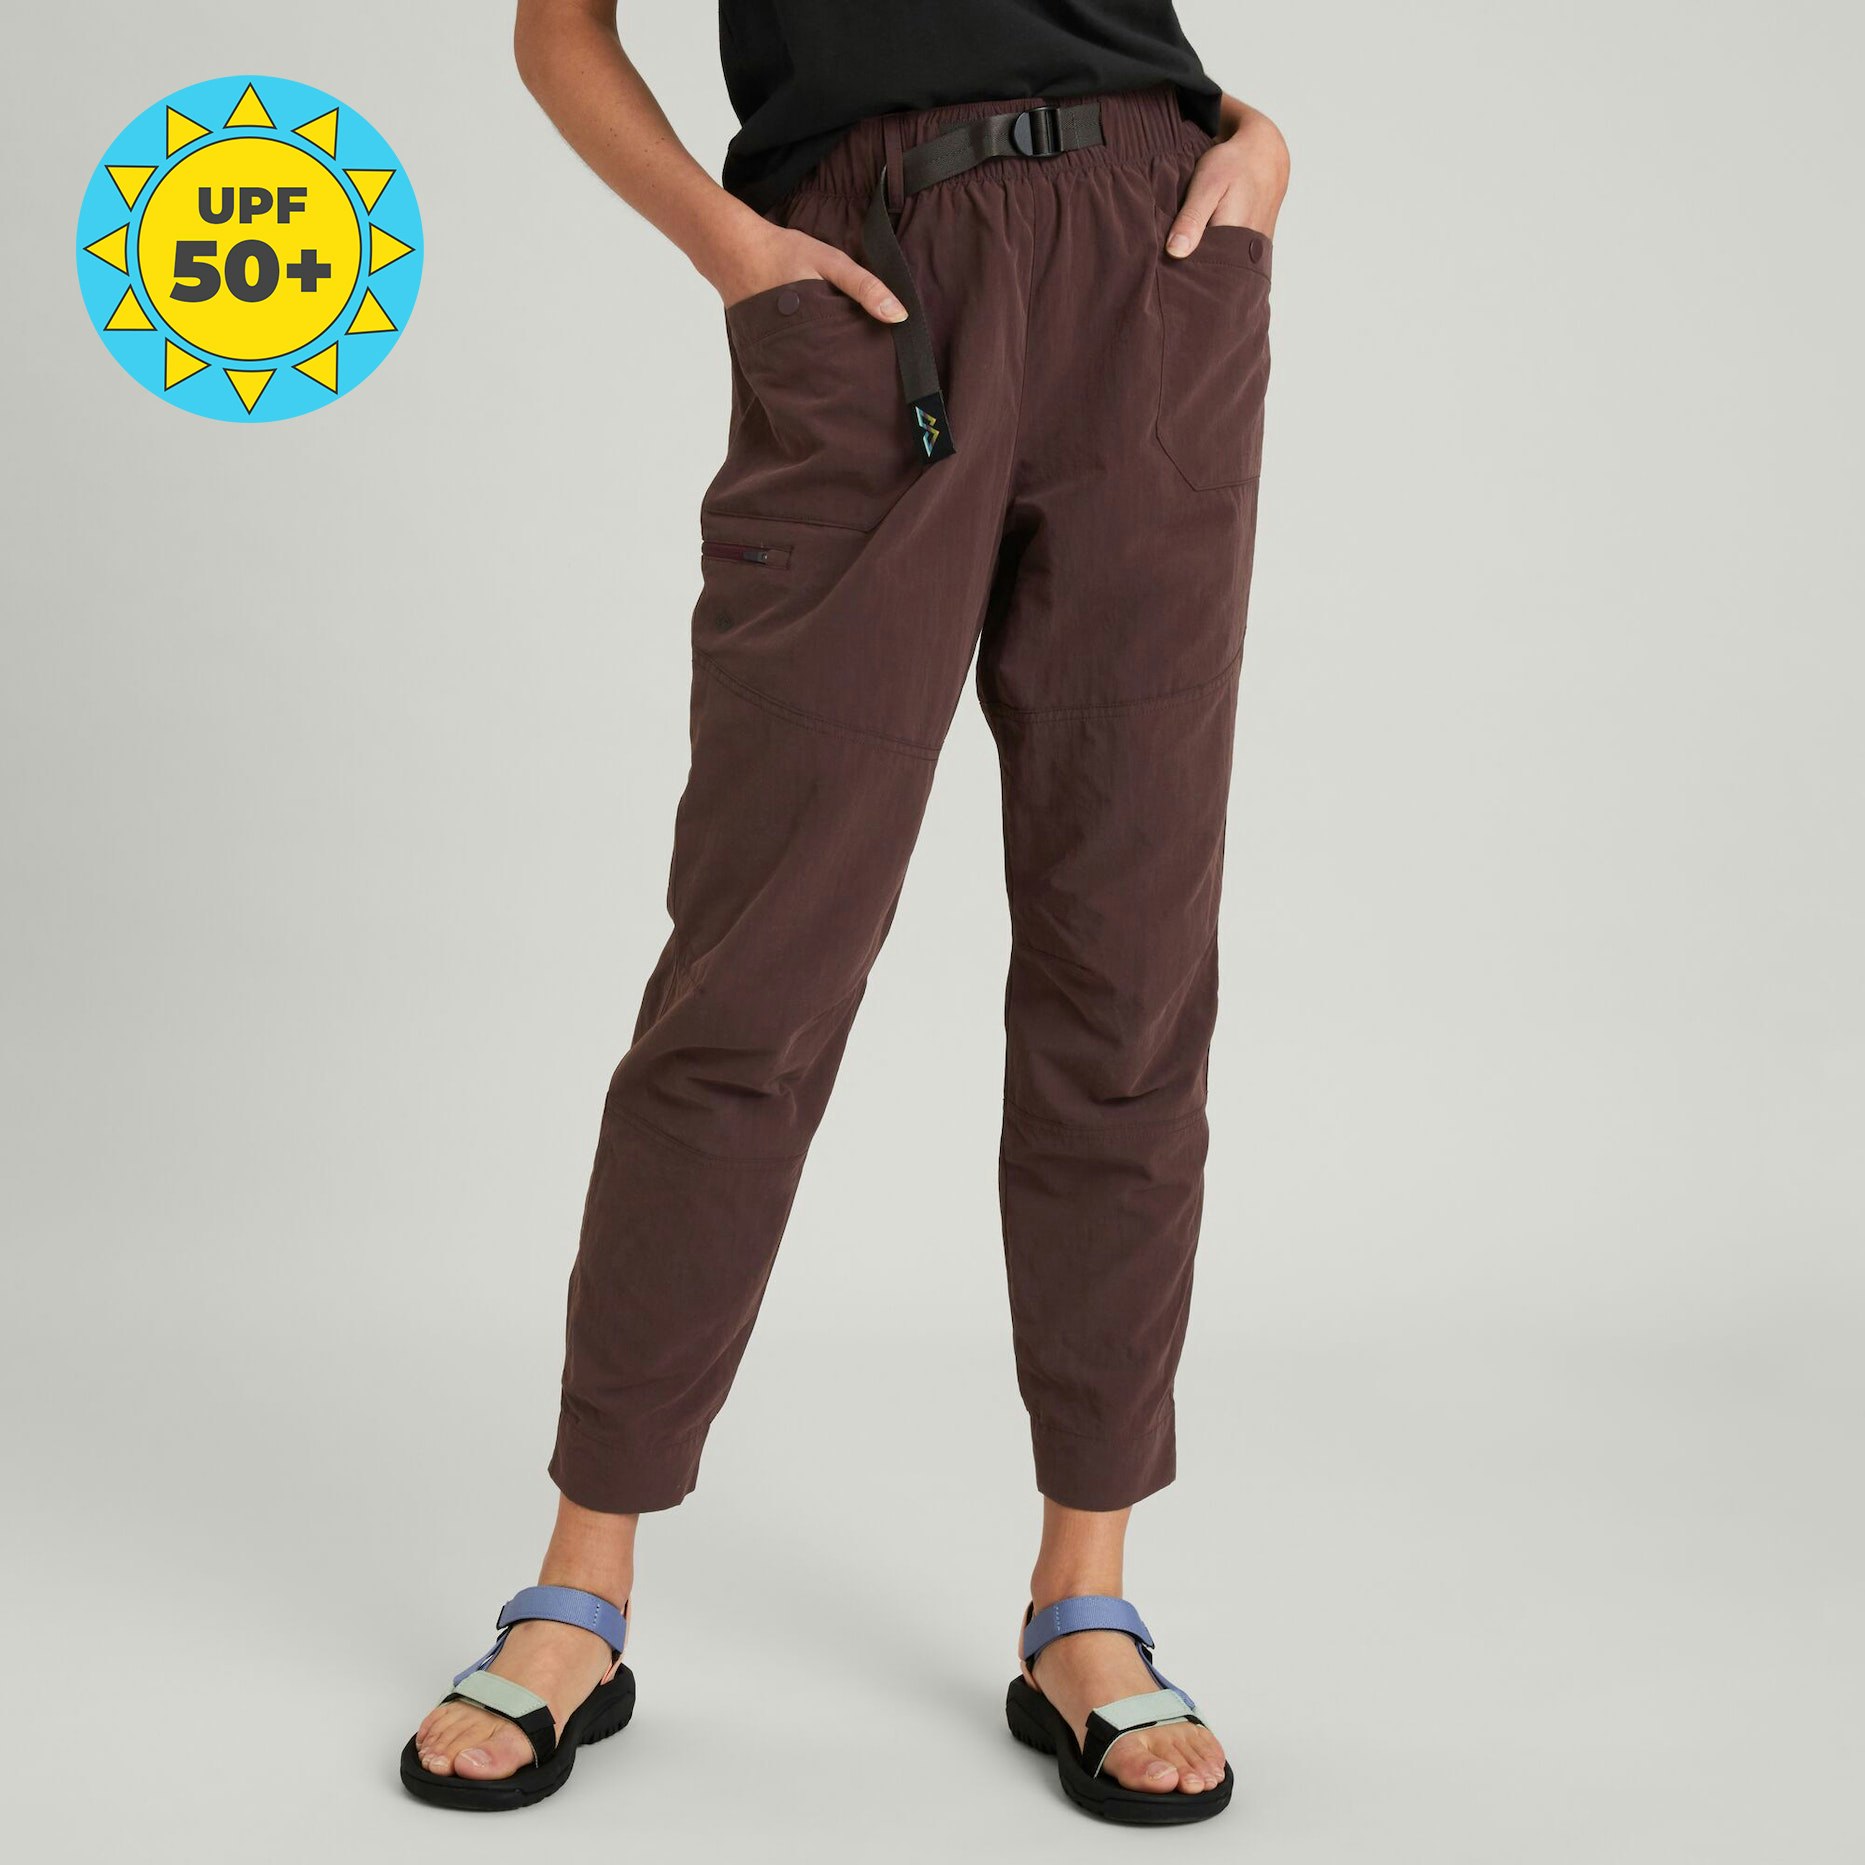 Kathmandu UltraCore Women's black thermal pants leggings outdoor Size 14